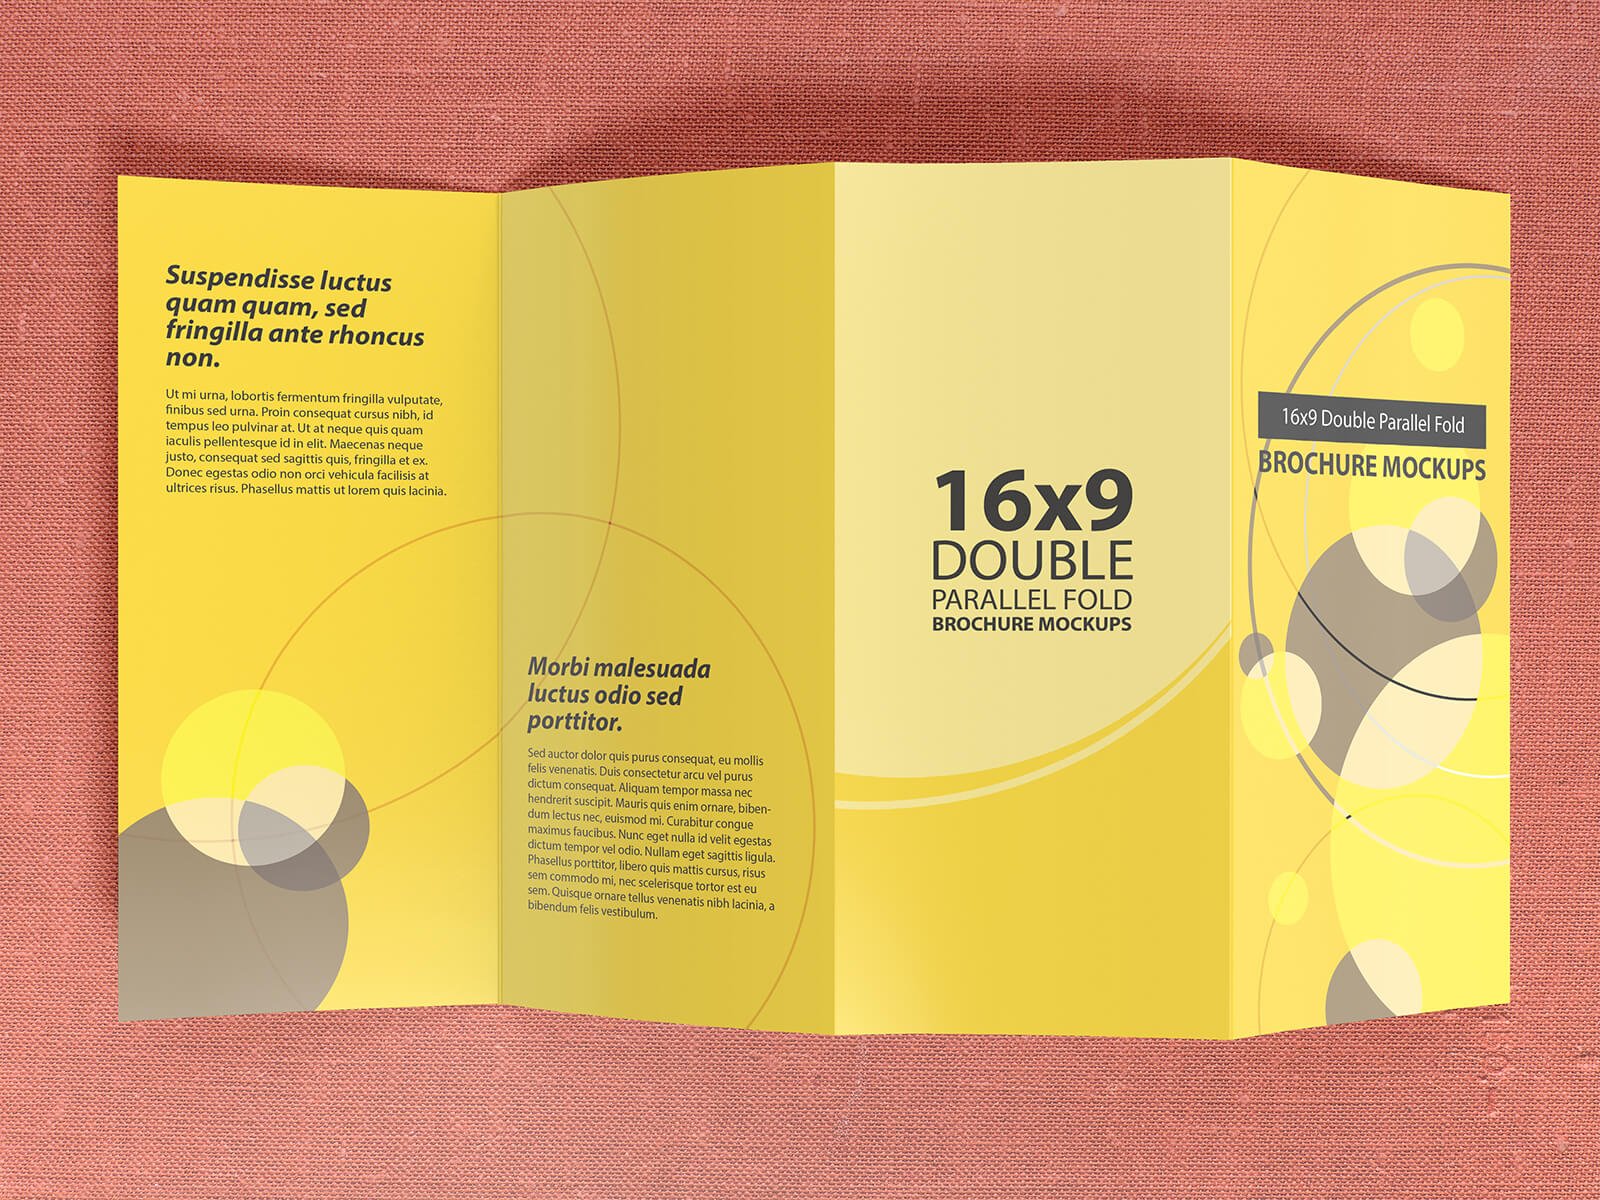 16x9 double parallel fold brochure mockups 04 277